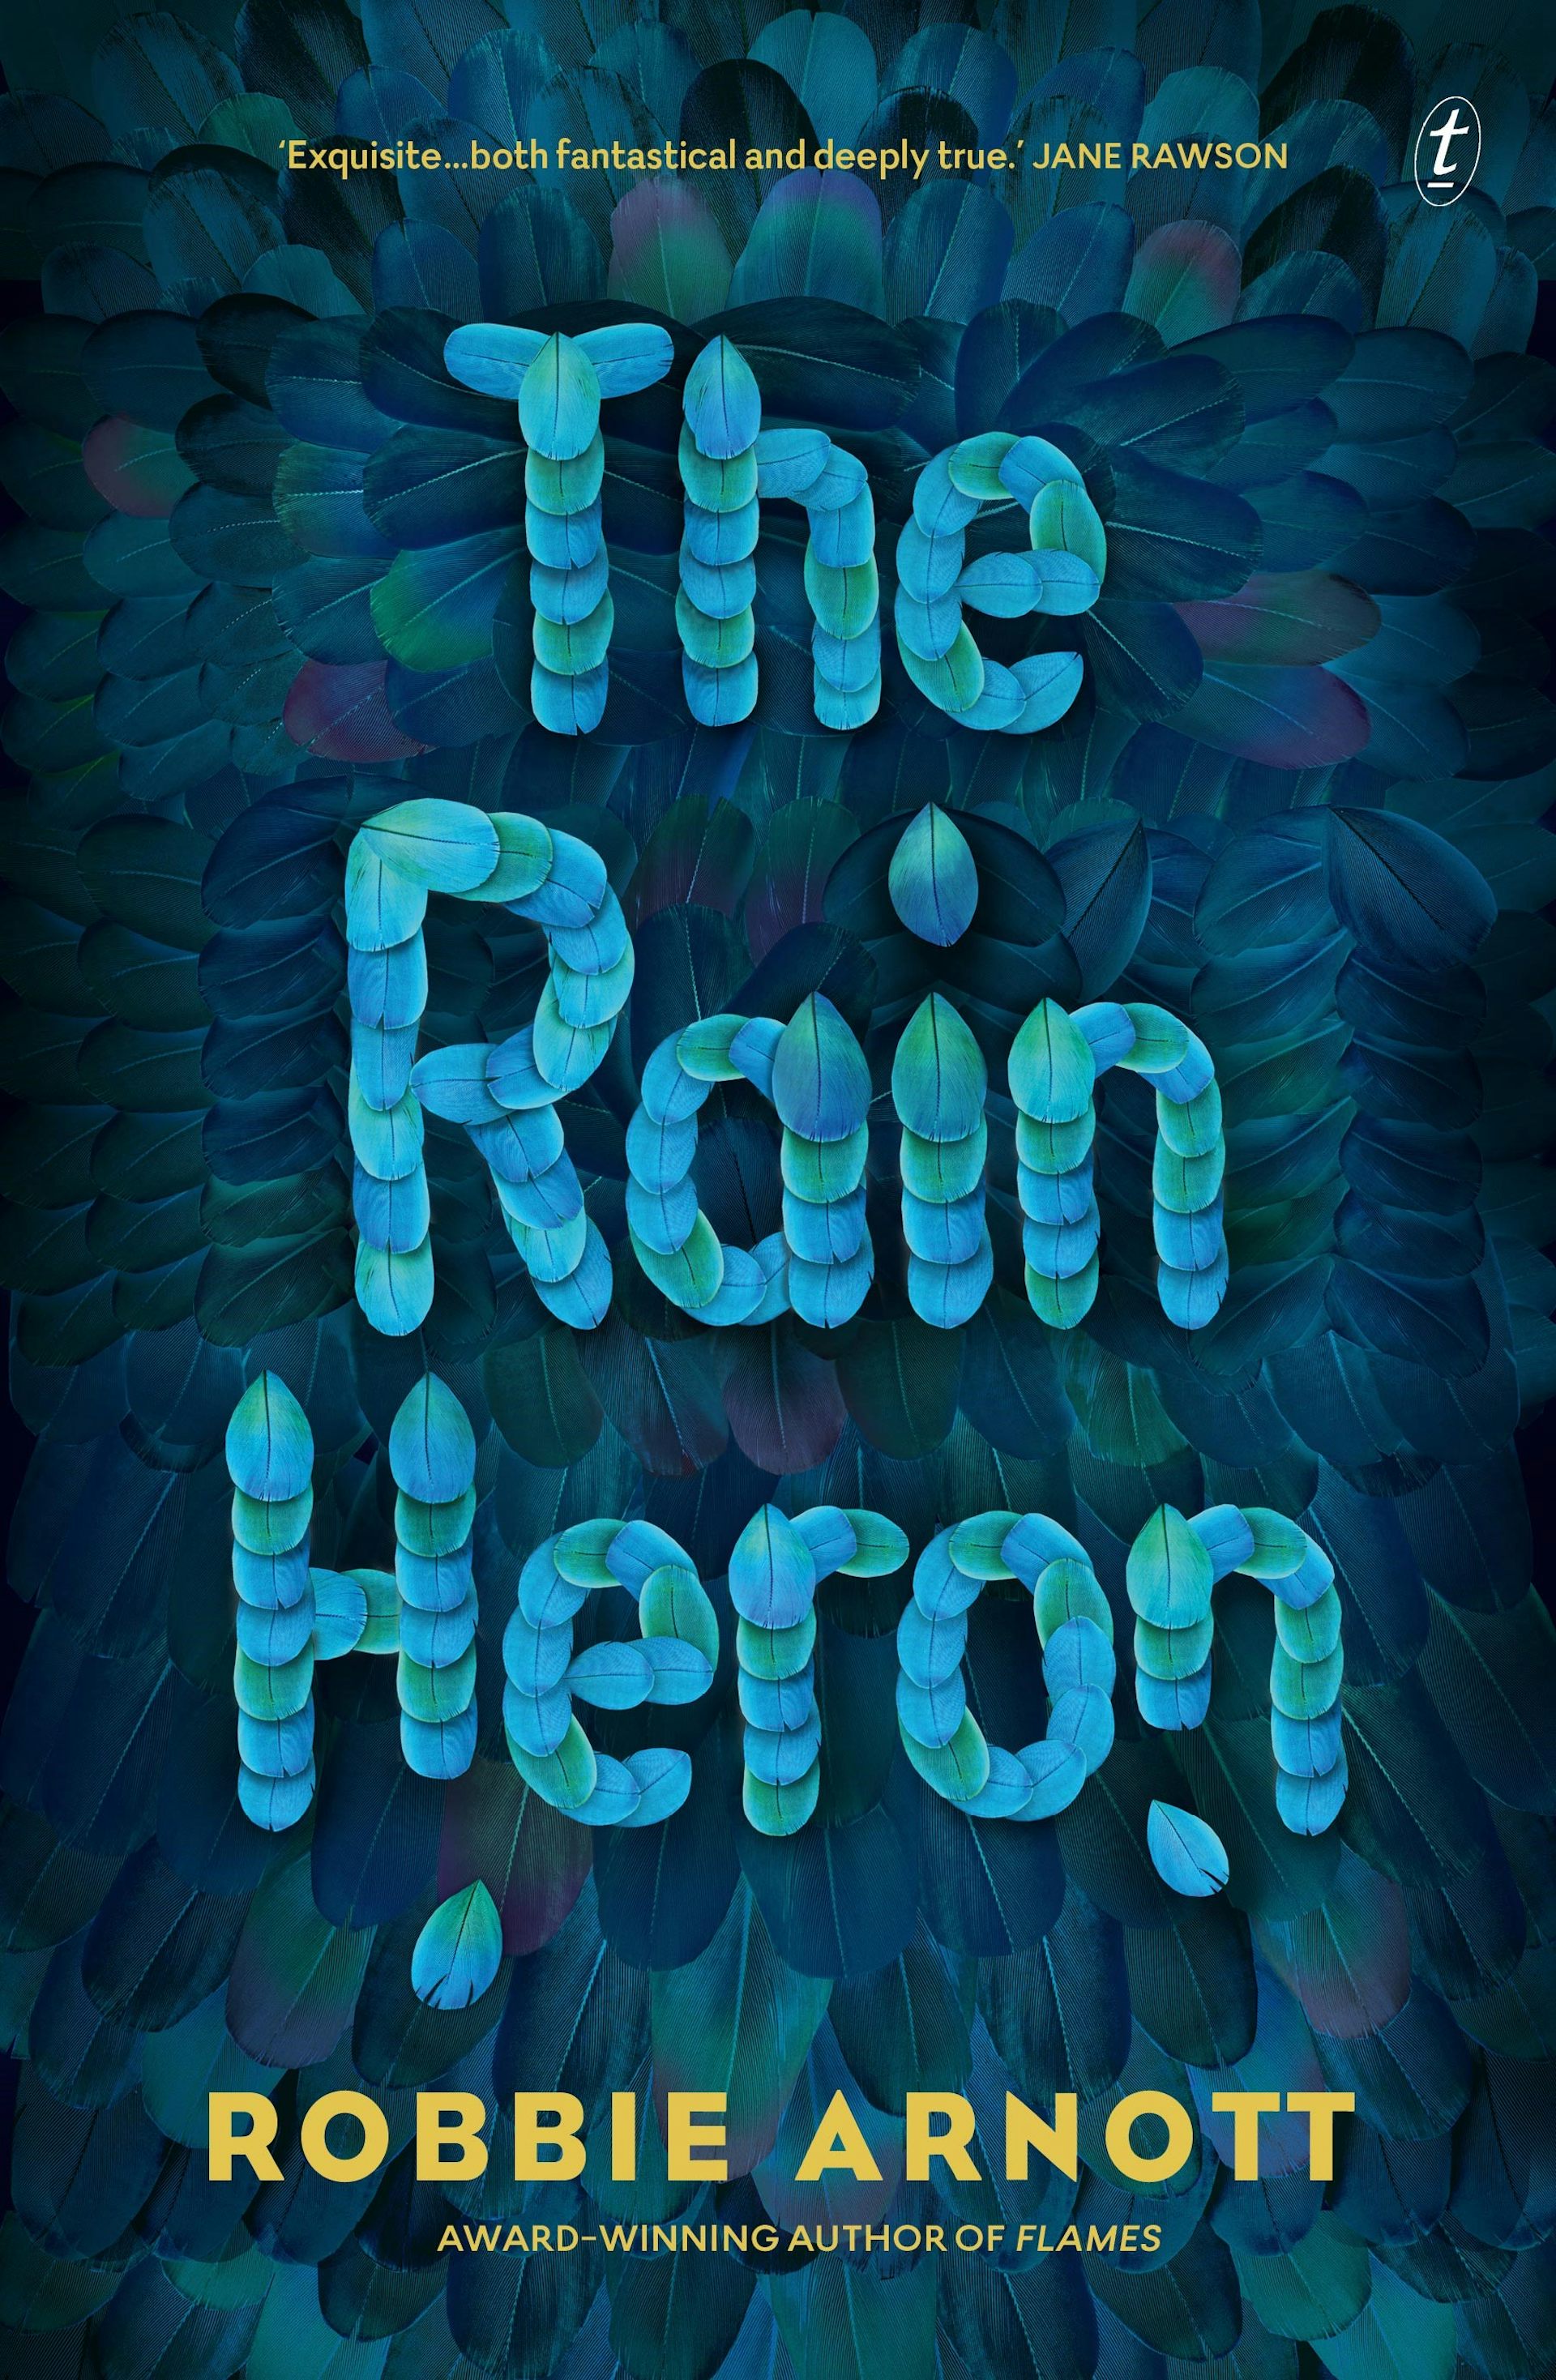 the rain heron book